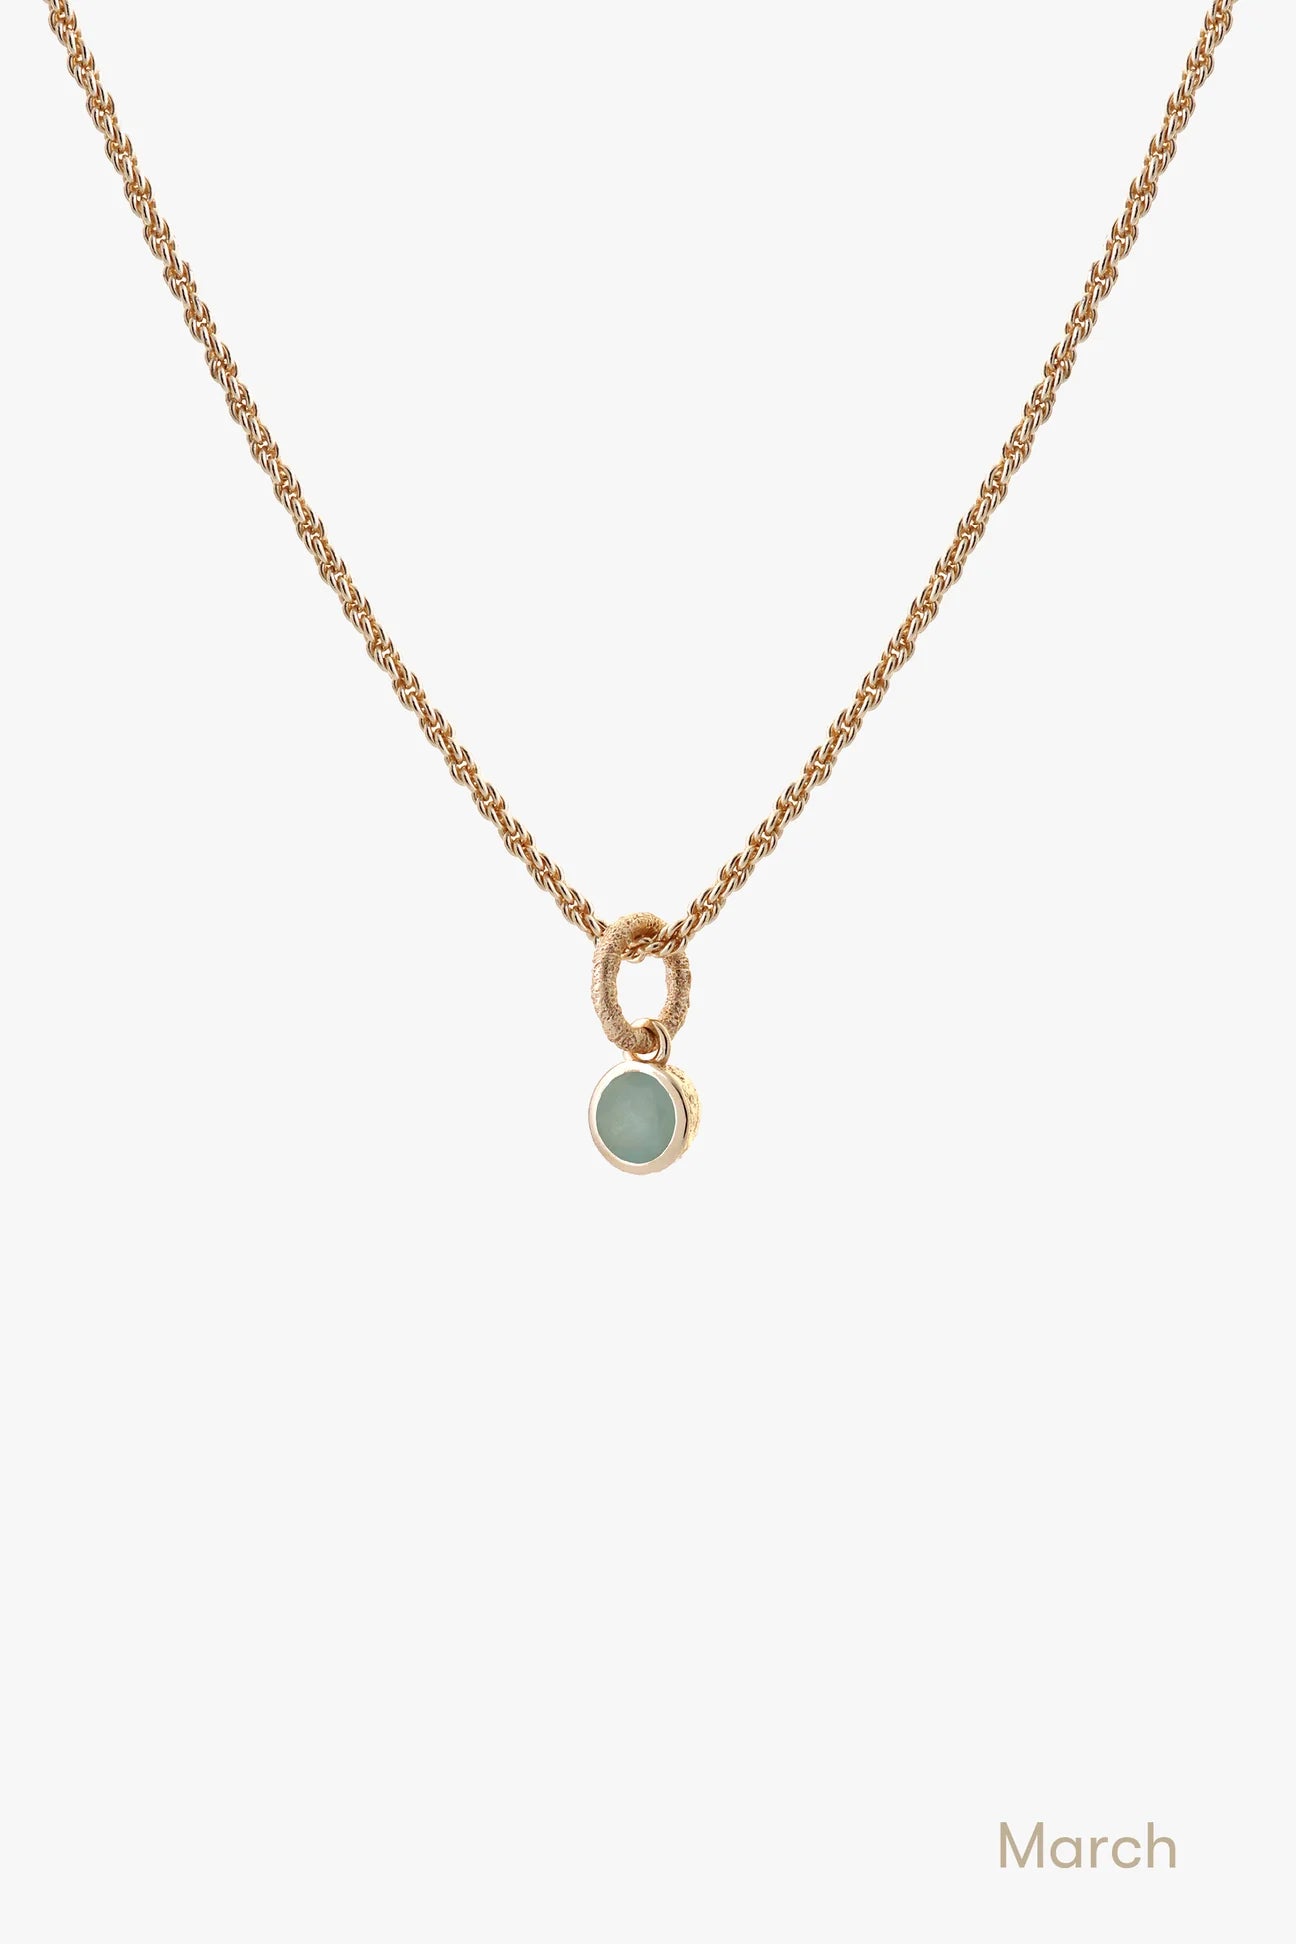 Aquamarine Birthstone Necklace Gold